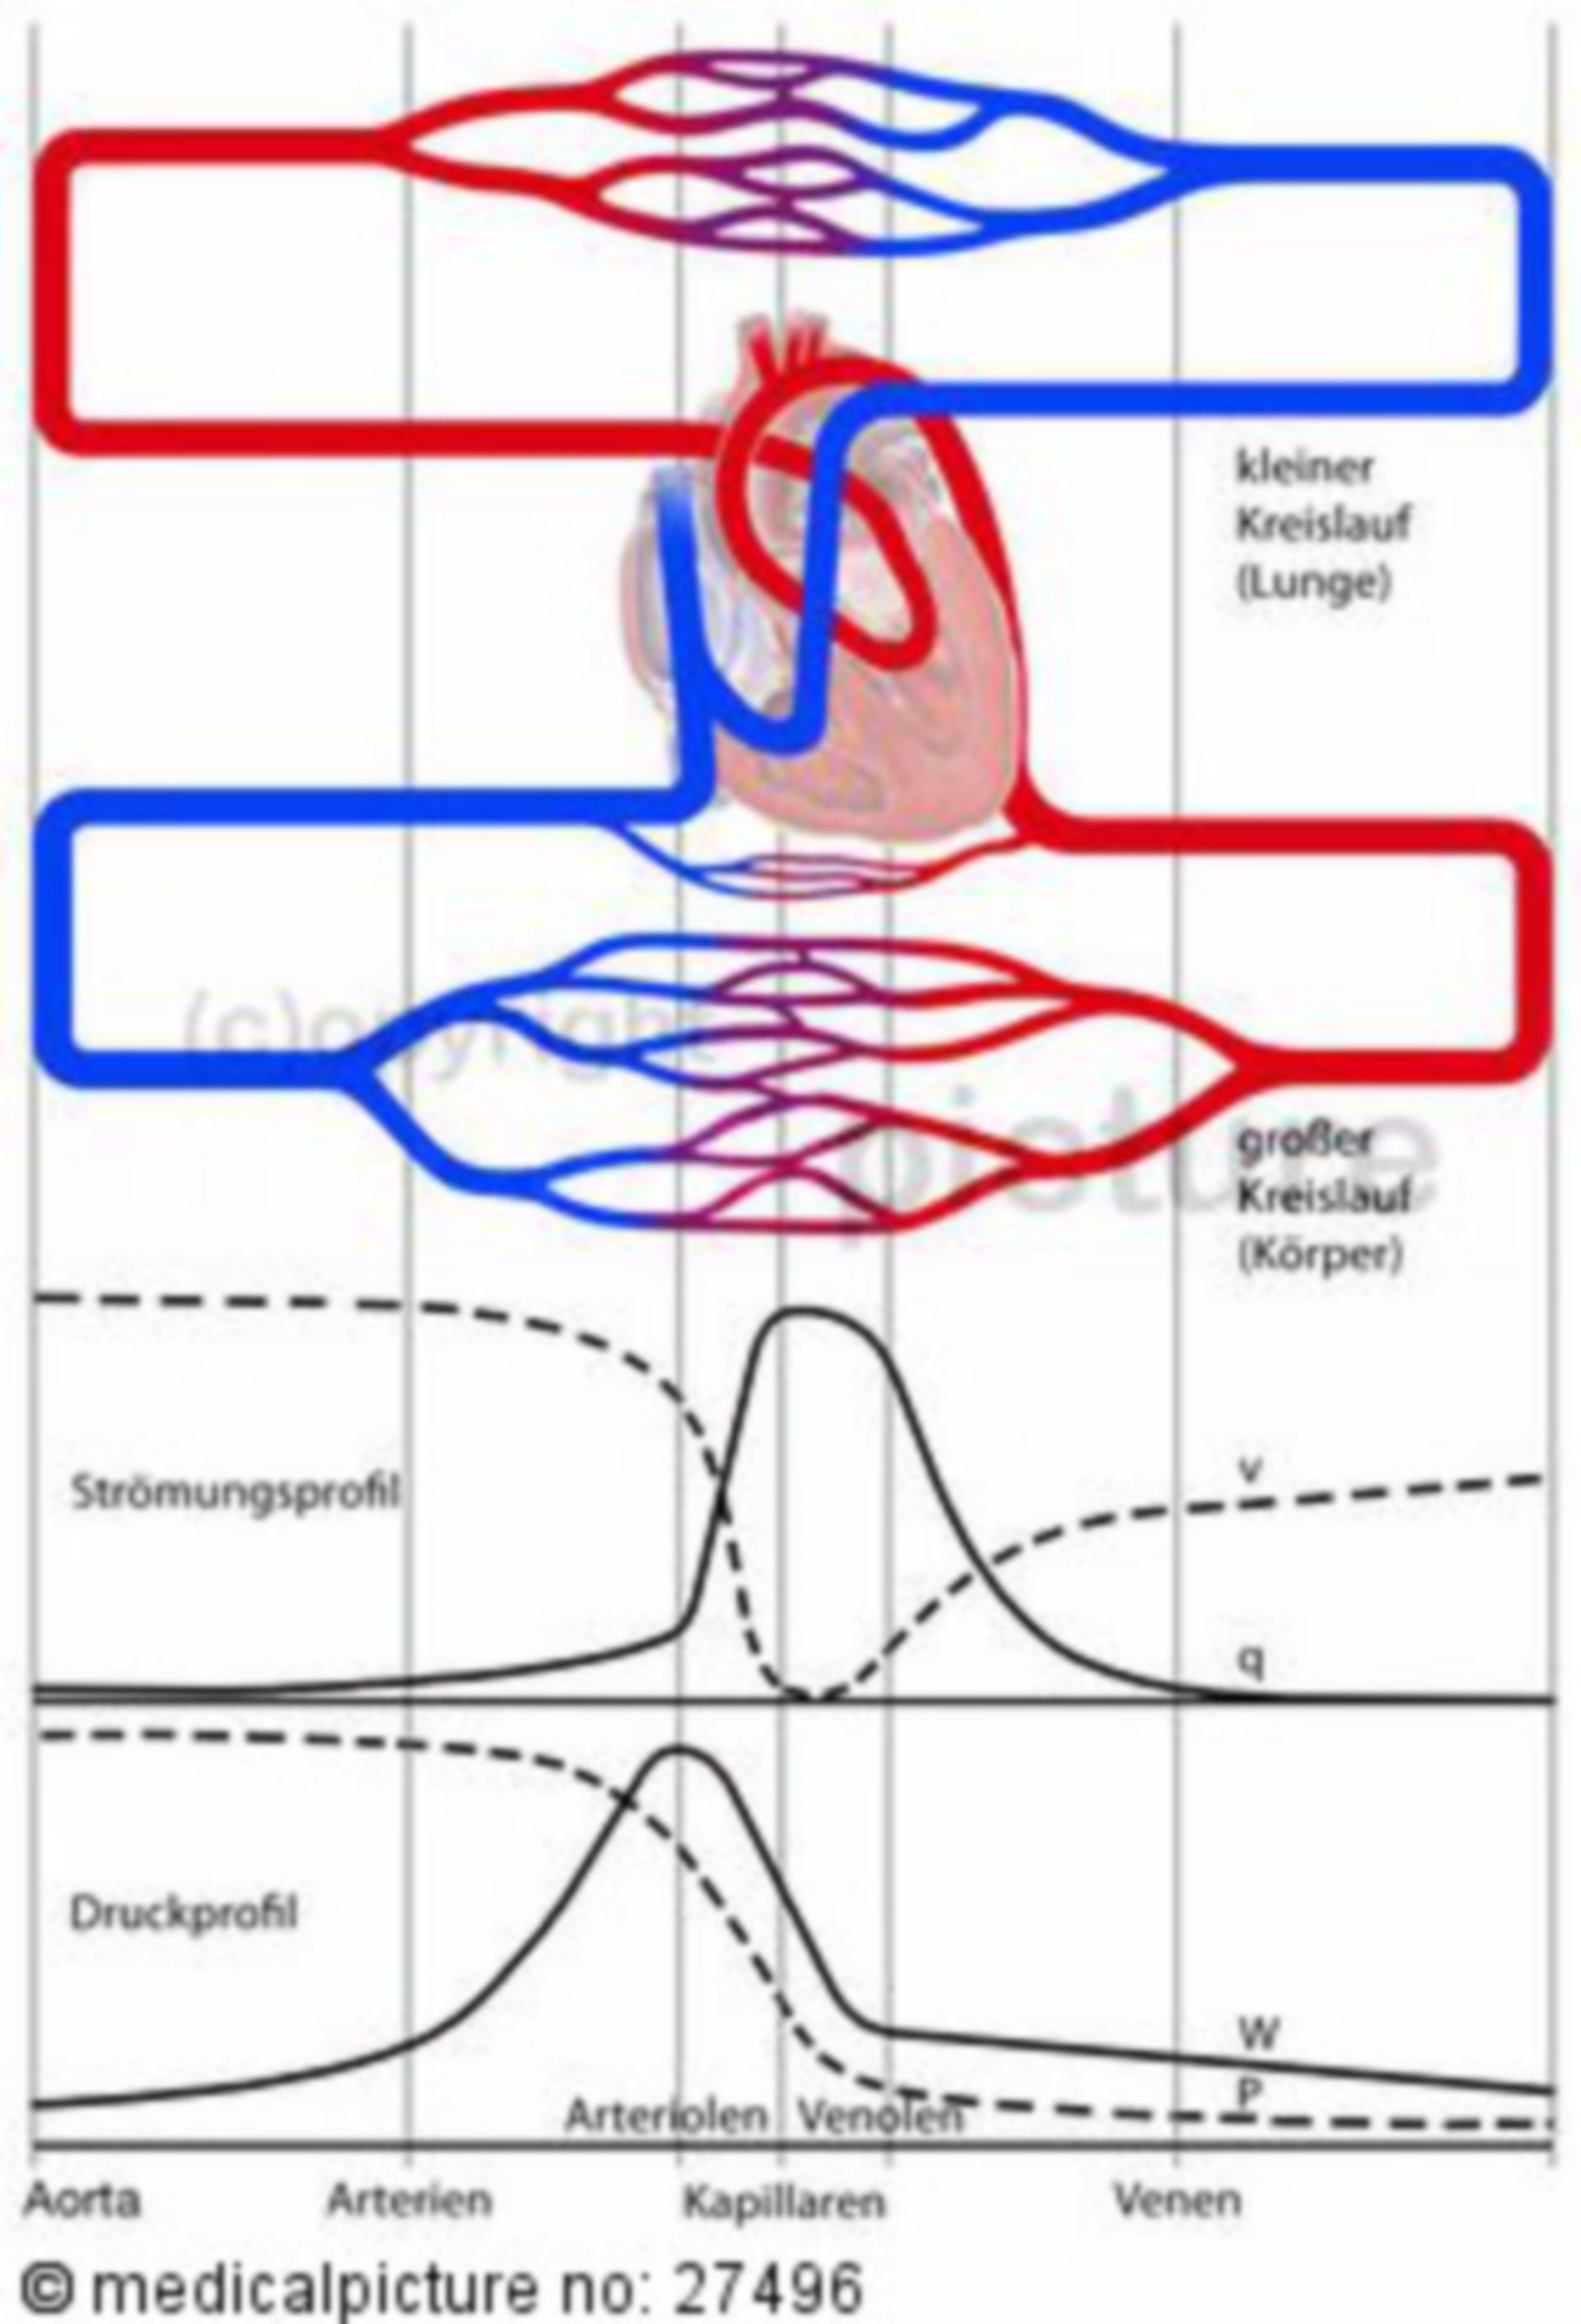 Blood circulation, pressure profile, flow pattern